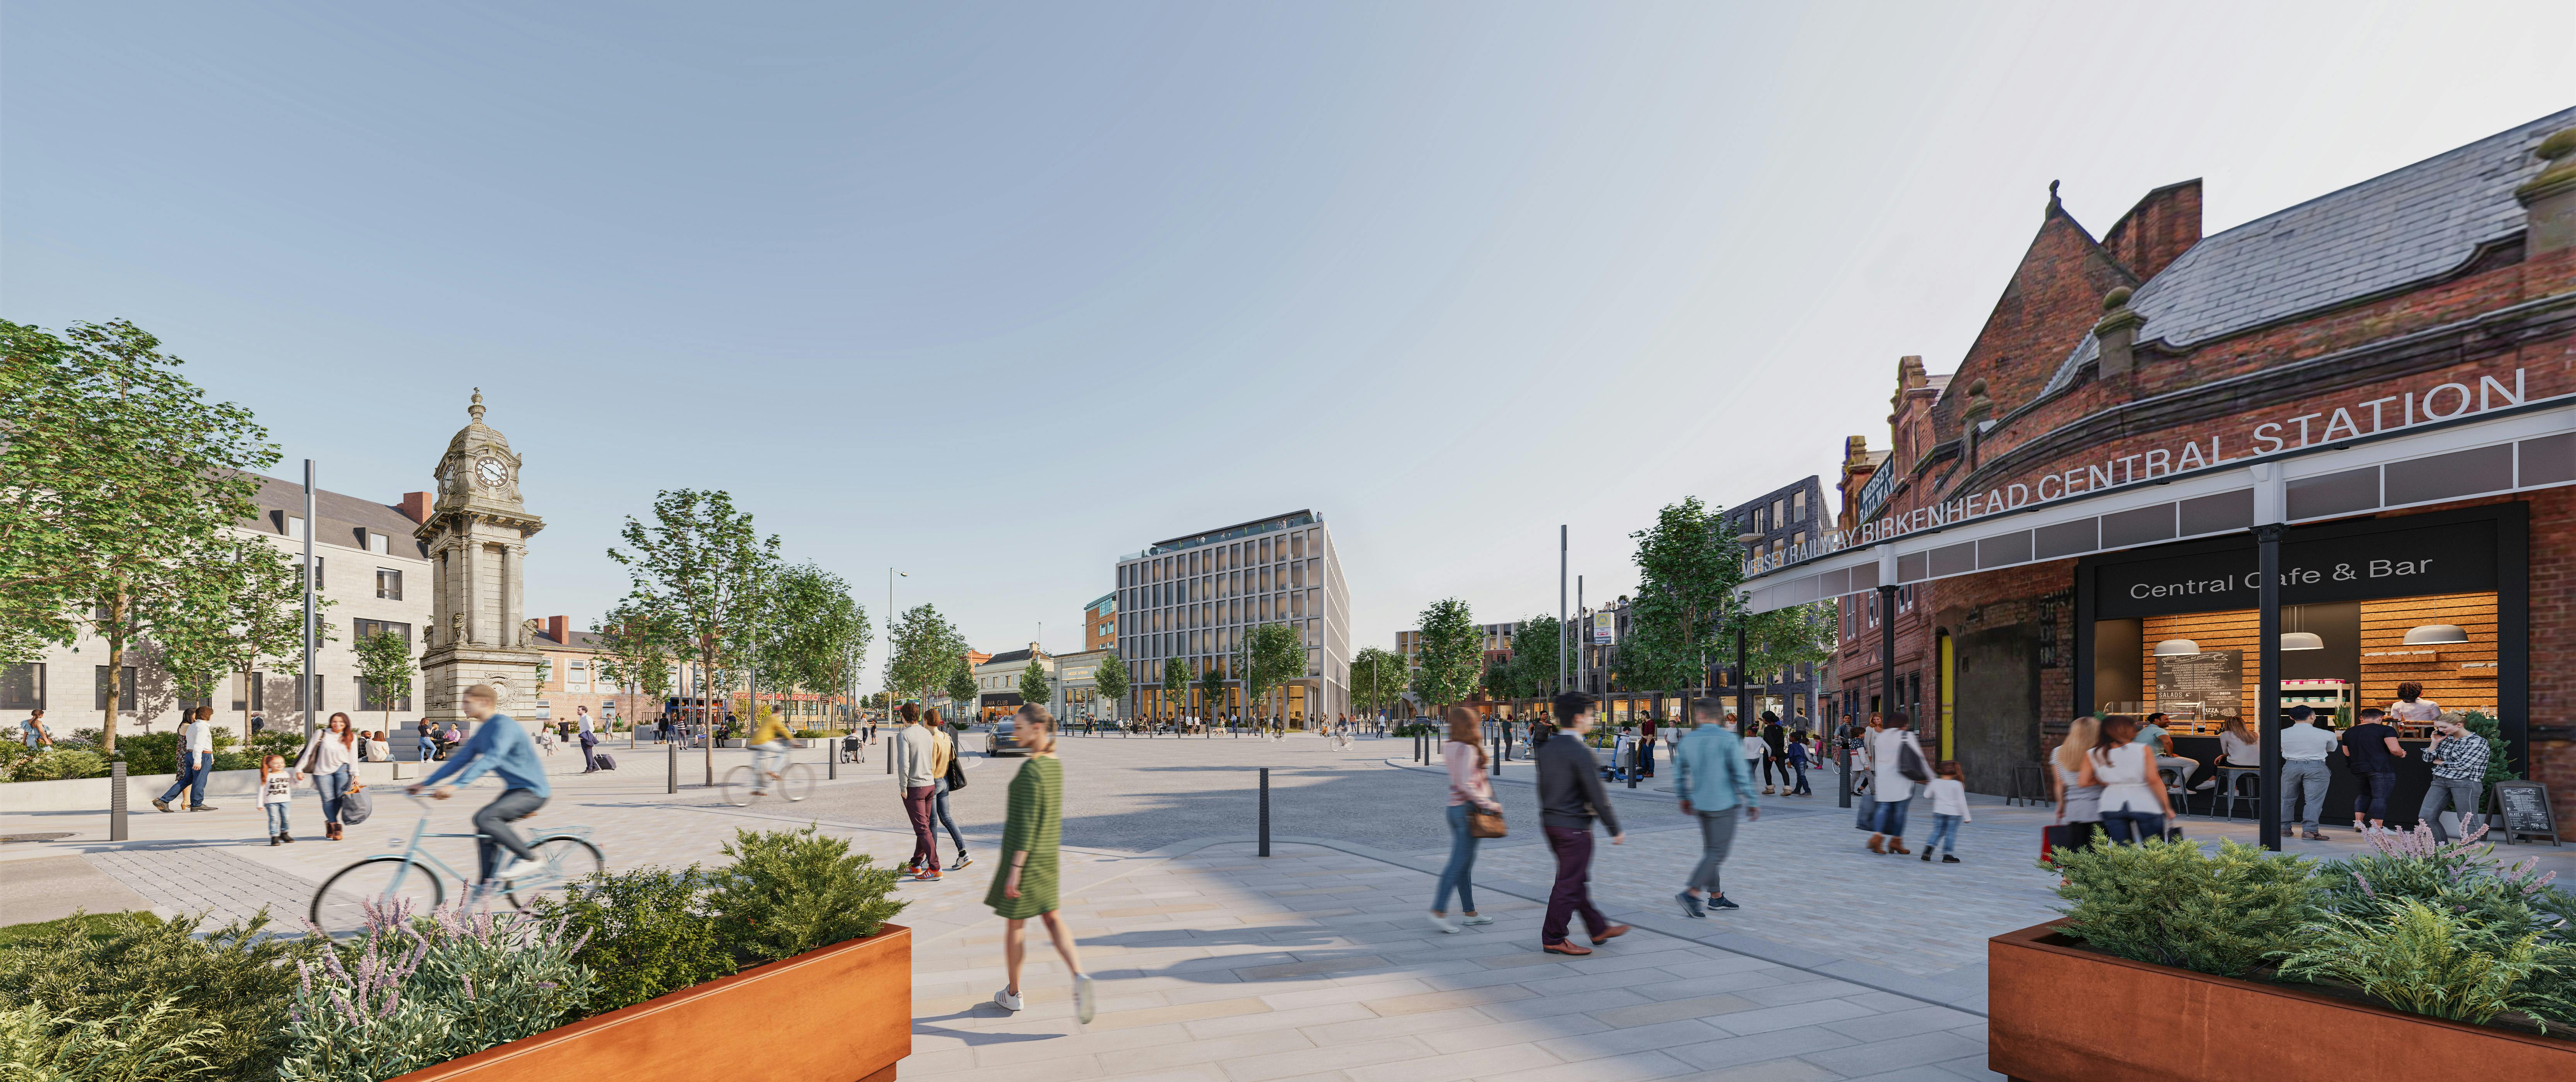 Image of Hind Street Masterplan design proposals